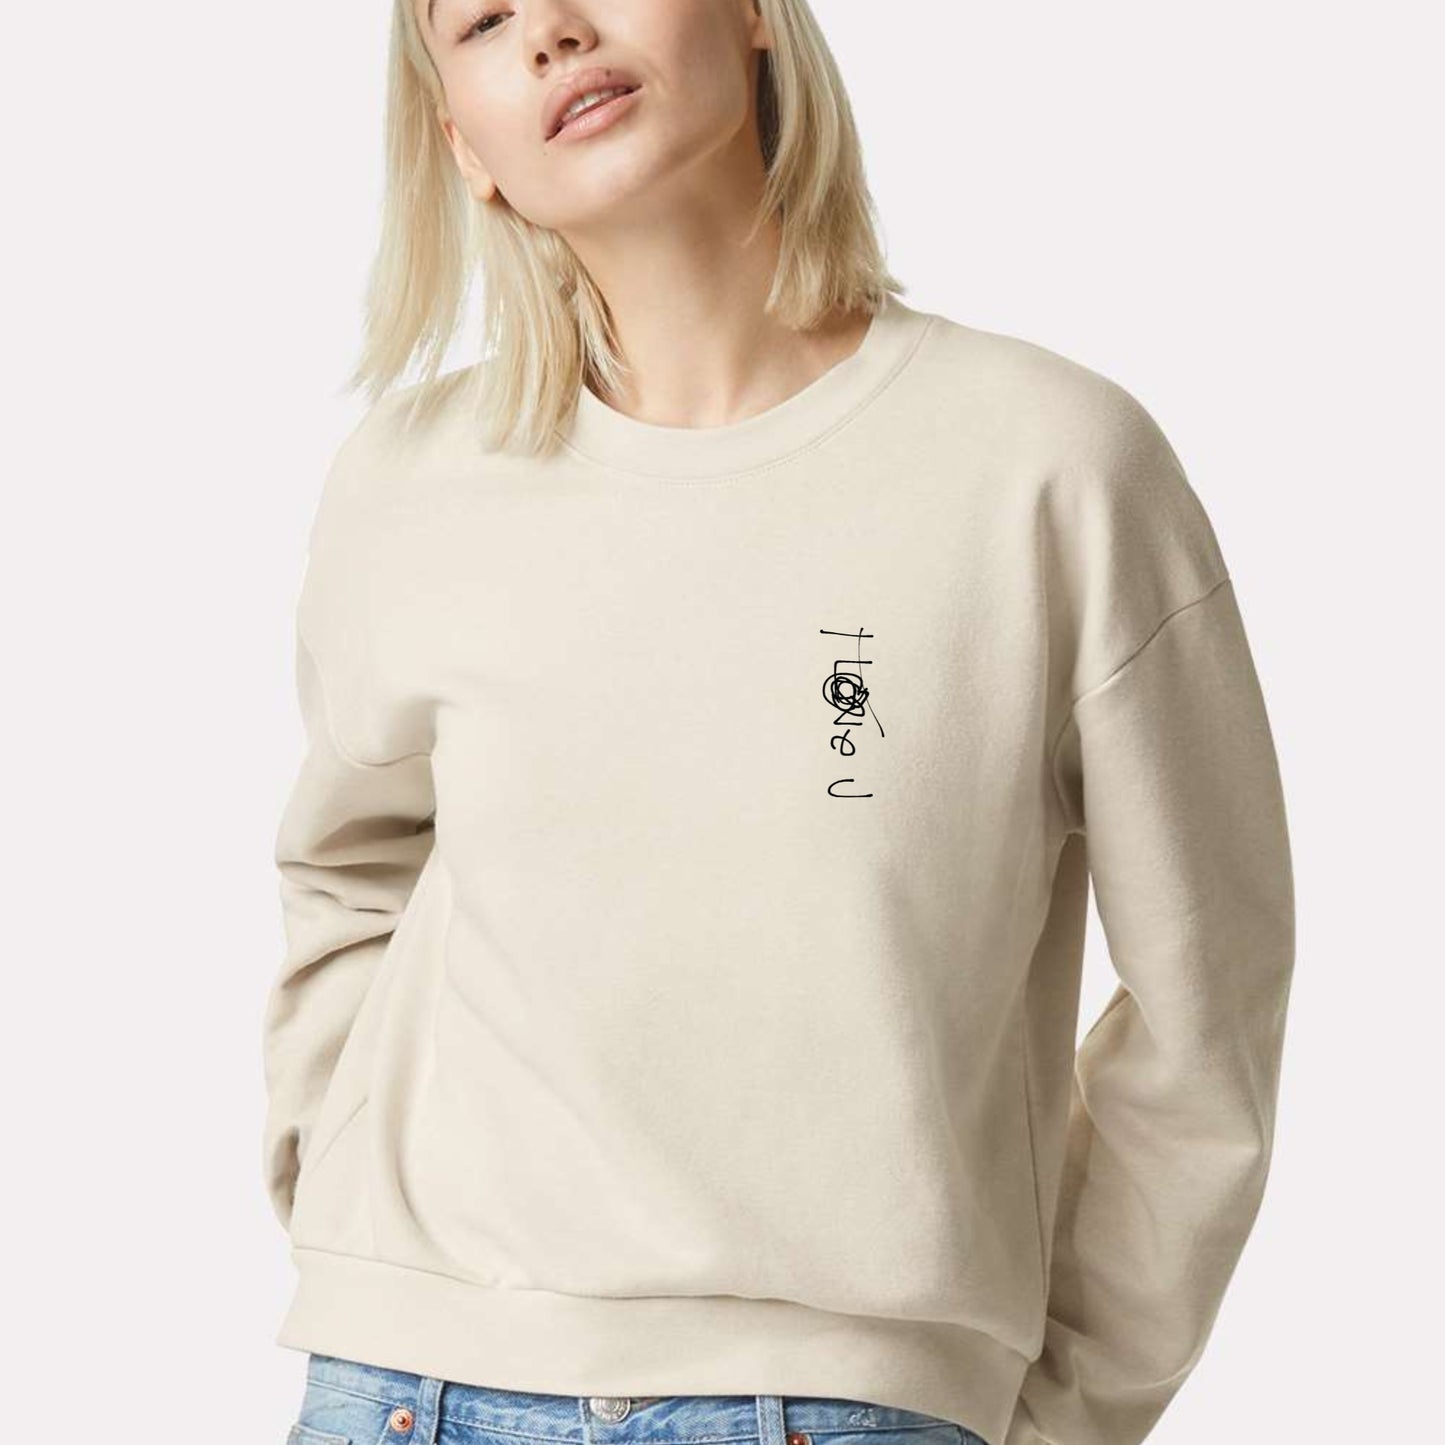 Womens 'I Love U' fleece crewneck sweater - Natural